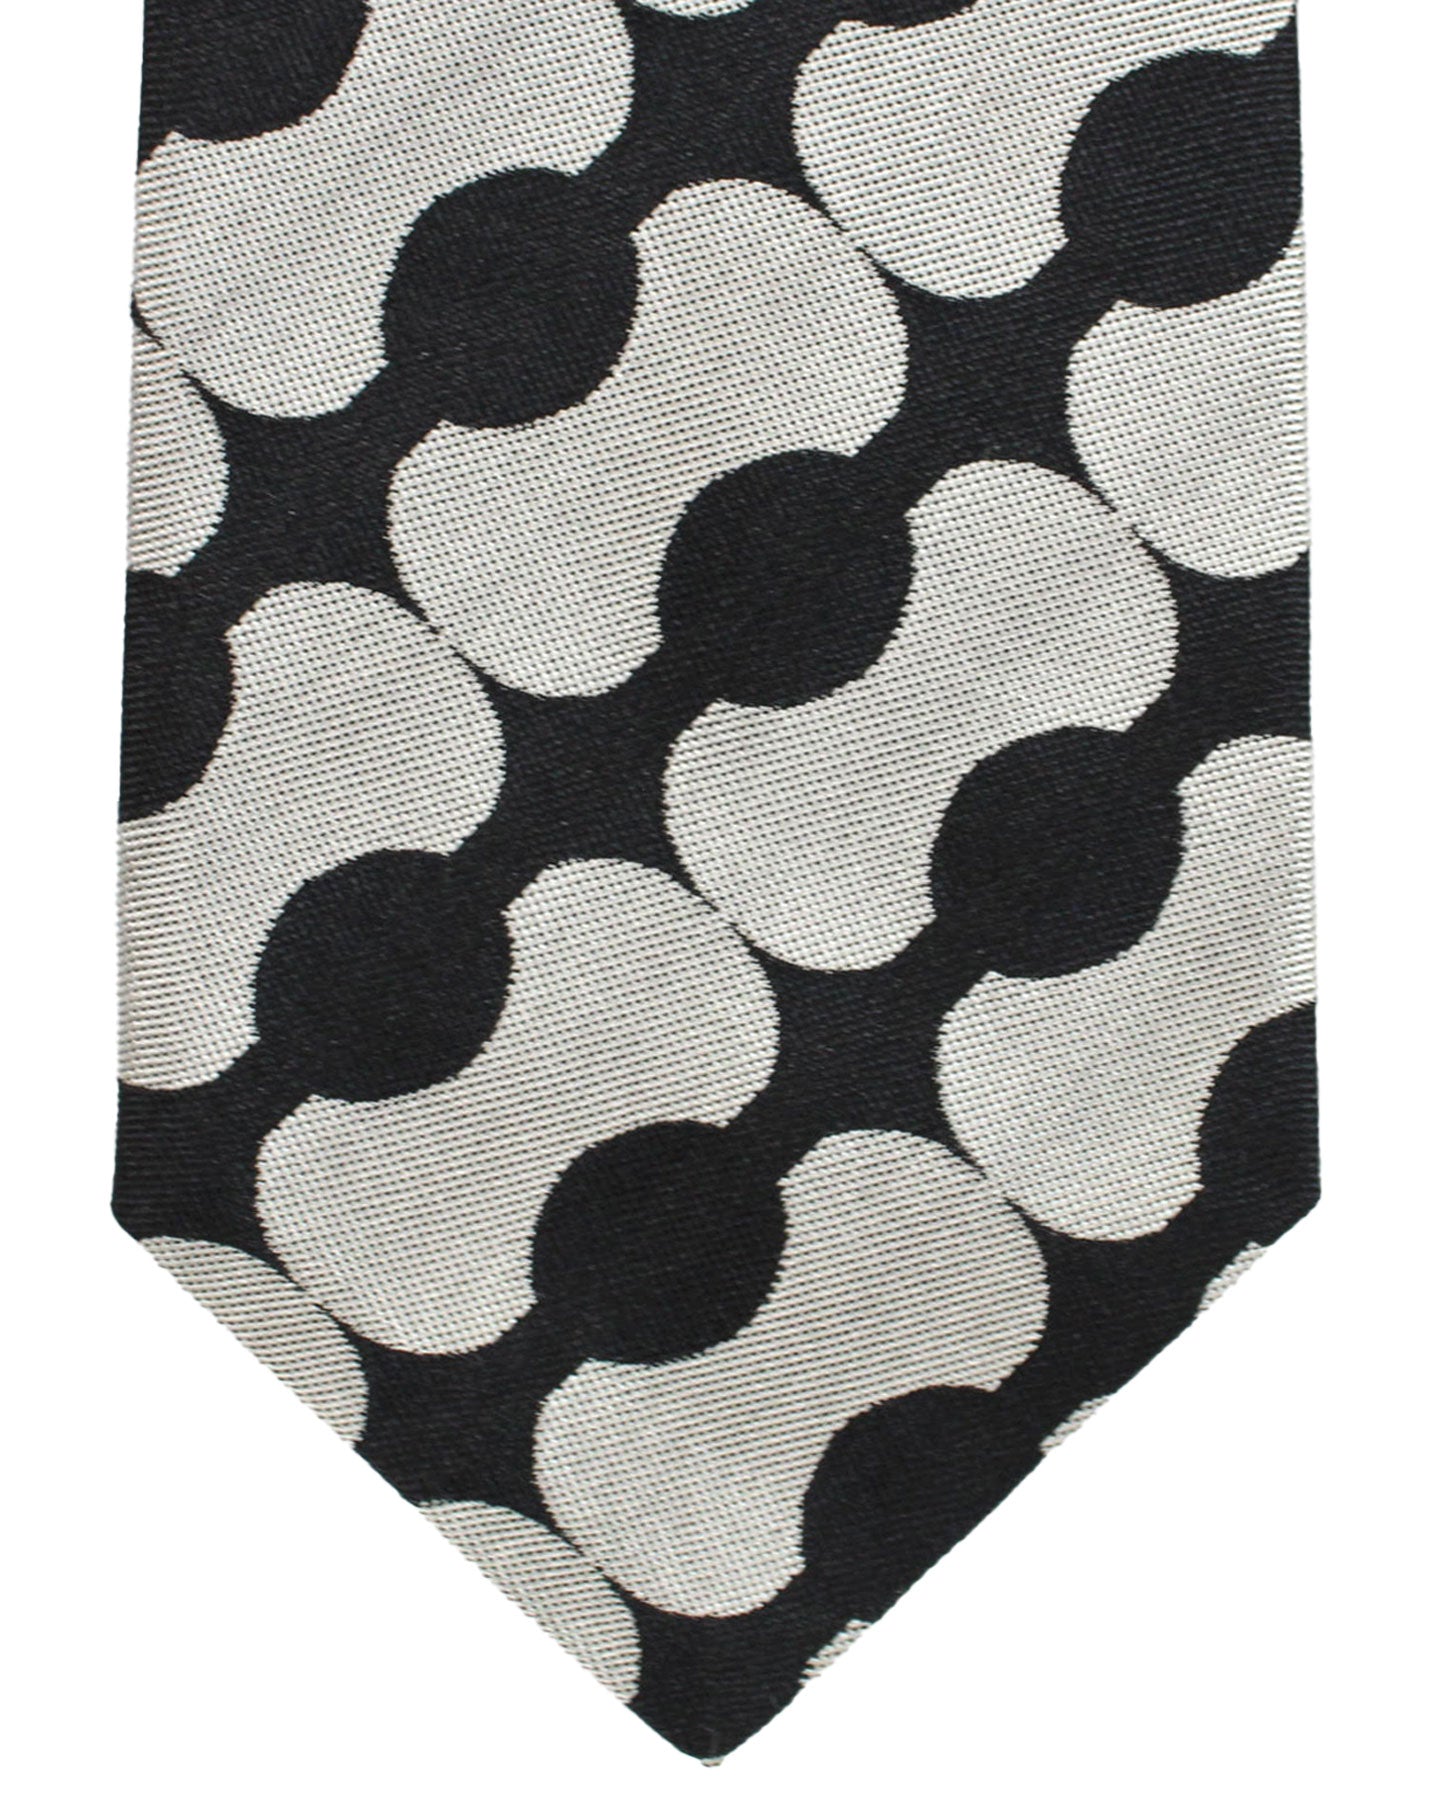 Gene Meyer Silk Designer Tie Gray Black Geometric - Hand Made in Italy